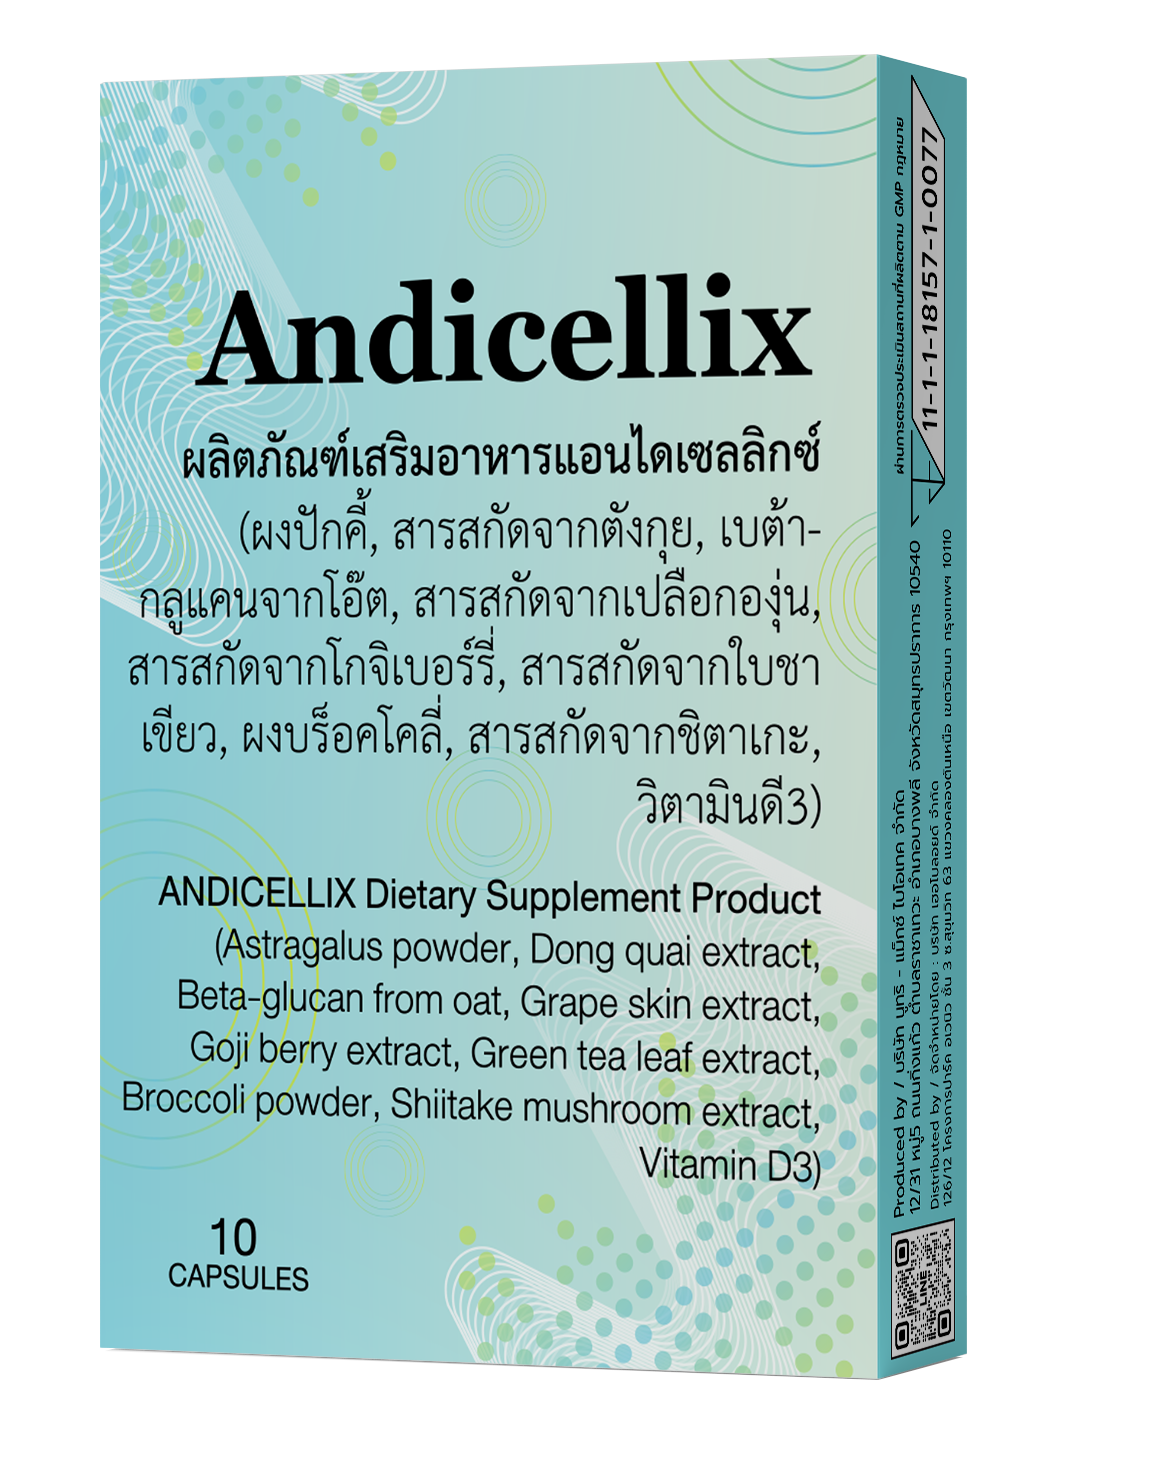 Andicellix - ซื้อที่ไหน - ขาย - Thailand - เว็บไซต์ของผู้ผลิต - lazada